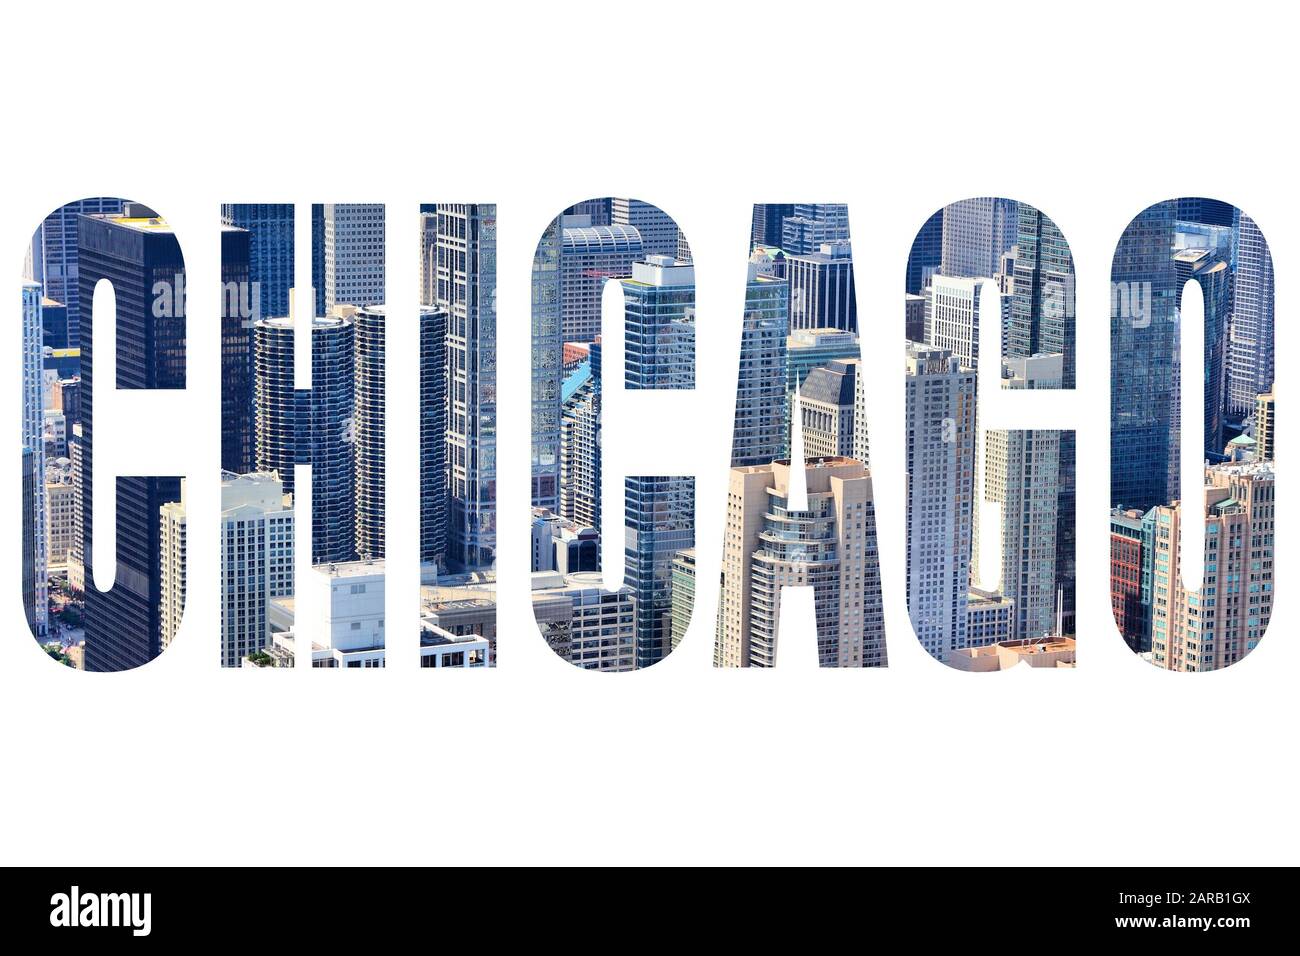 Chicago city name - USA travel destination sign on white background. Stock Photo